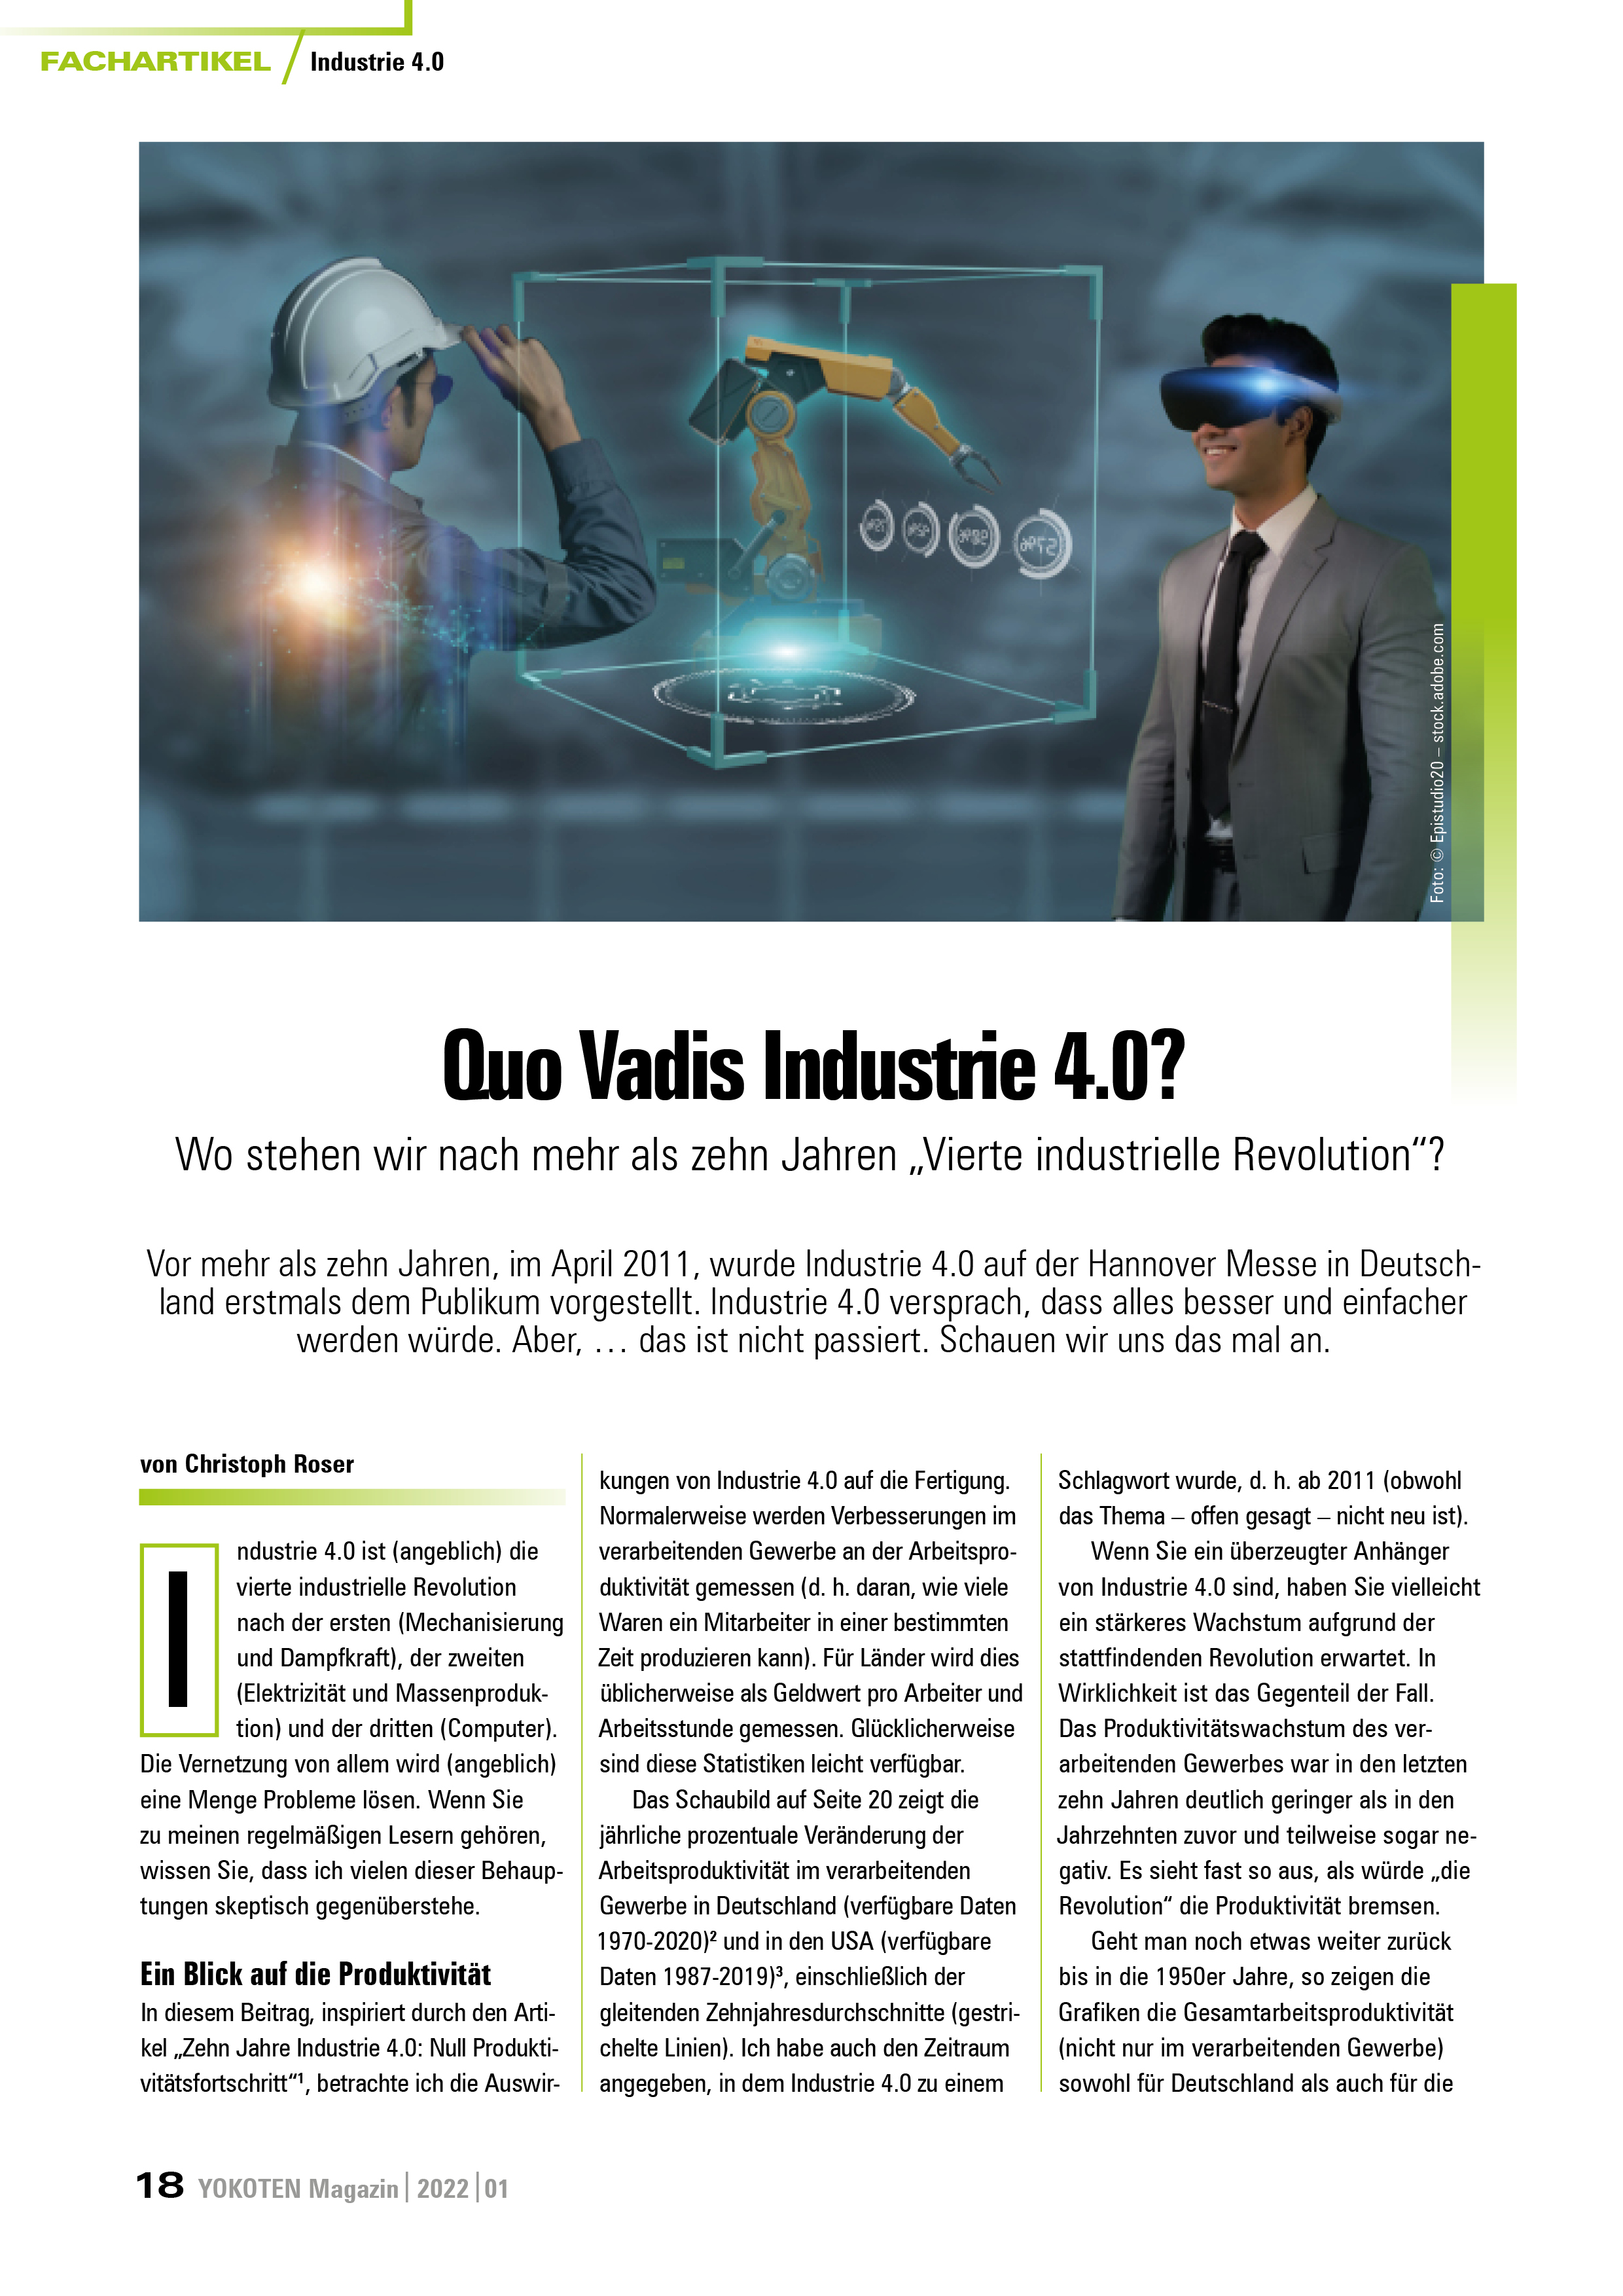 Quo Vadis Industrie 4.0? - Artikel aus Fachmagazin YOKOTEN 2022-01